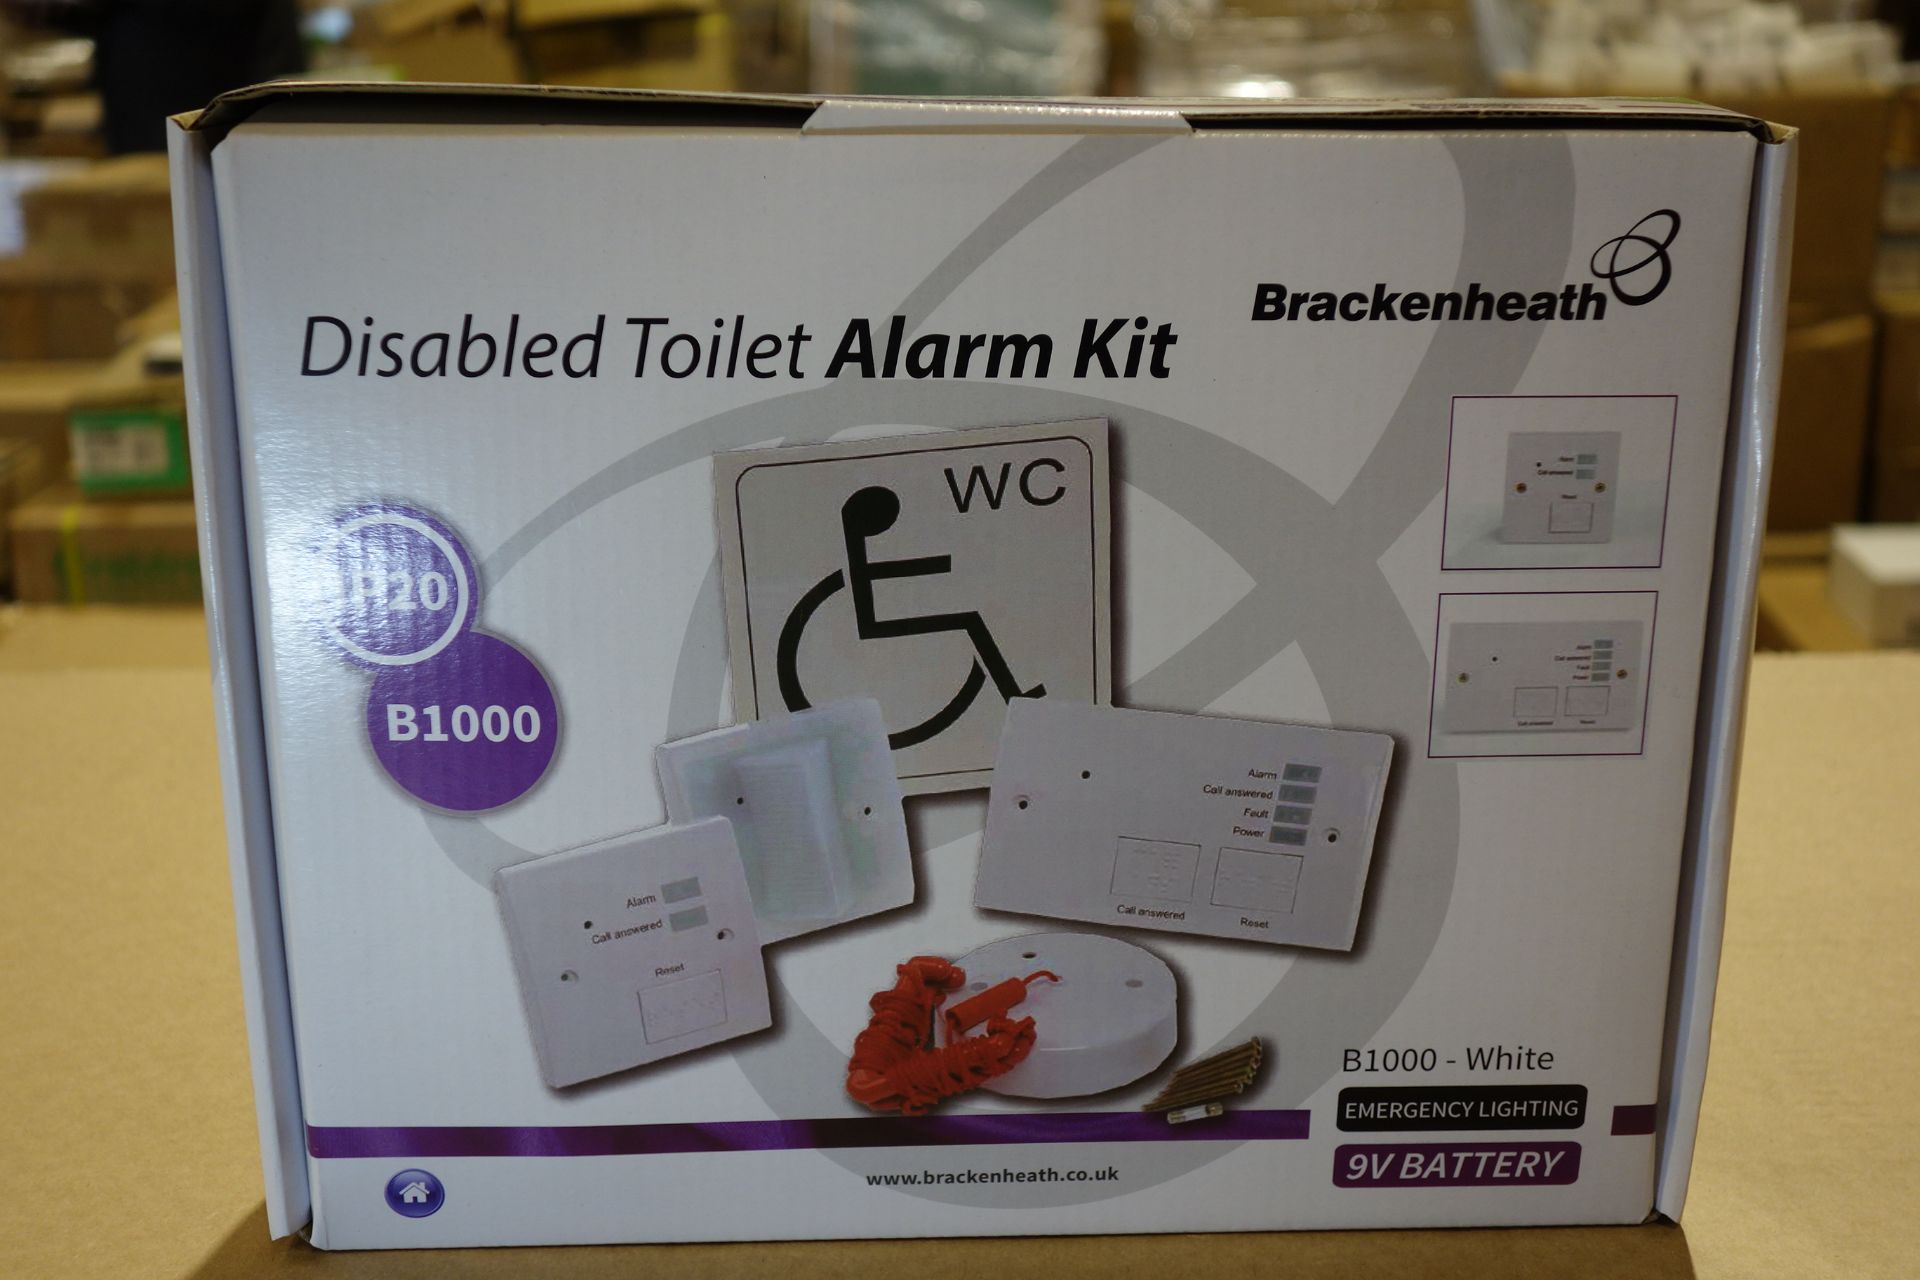 5x Brackenheath B1000 Disabled Toilet Alarm Kits